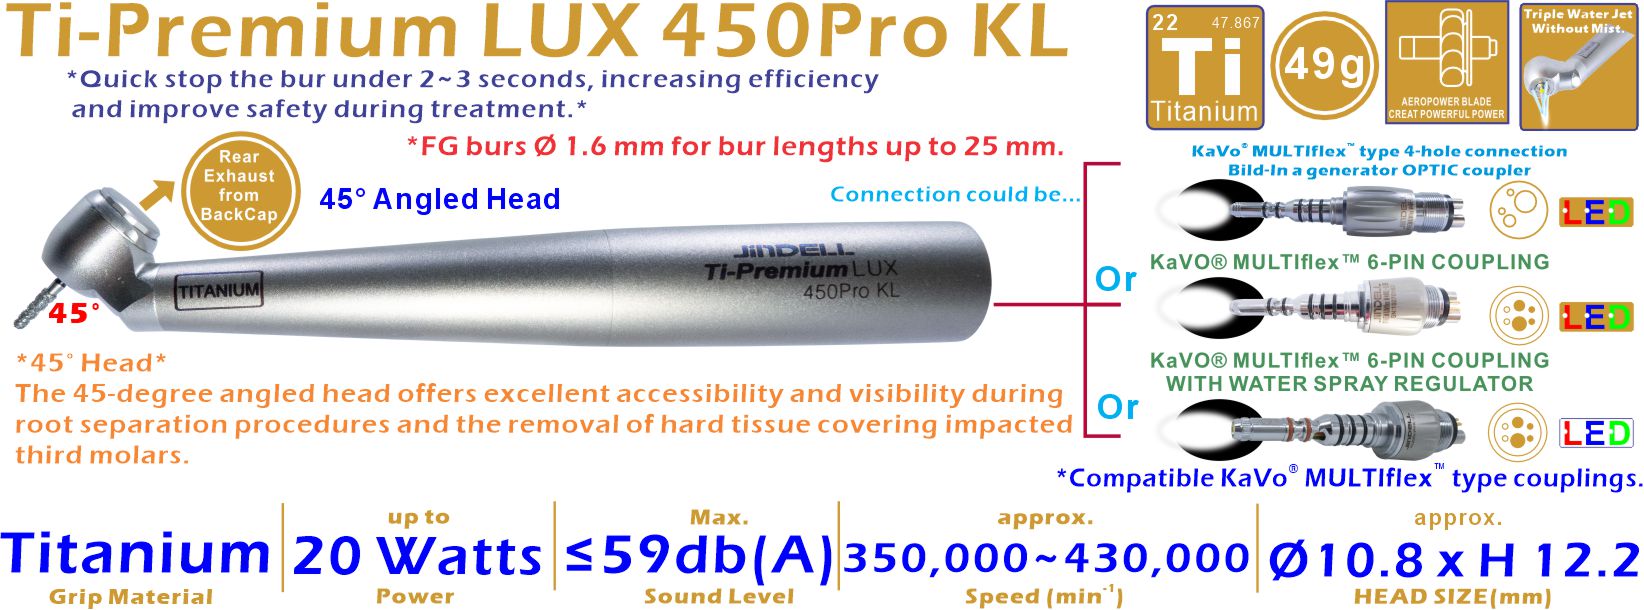 Ti-Premium LUX 450Pro KL Detail